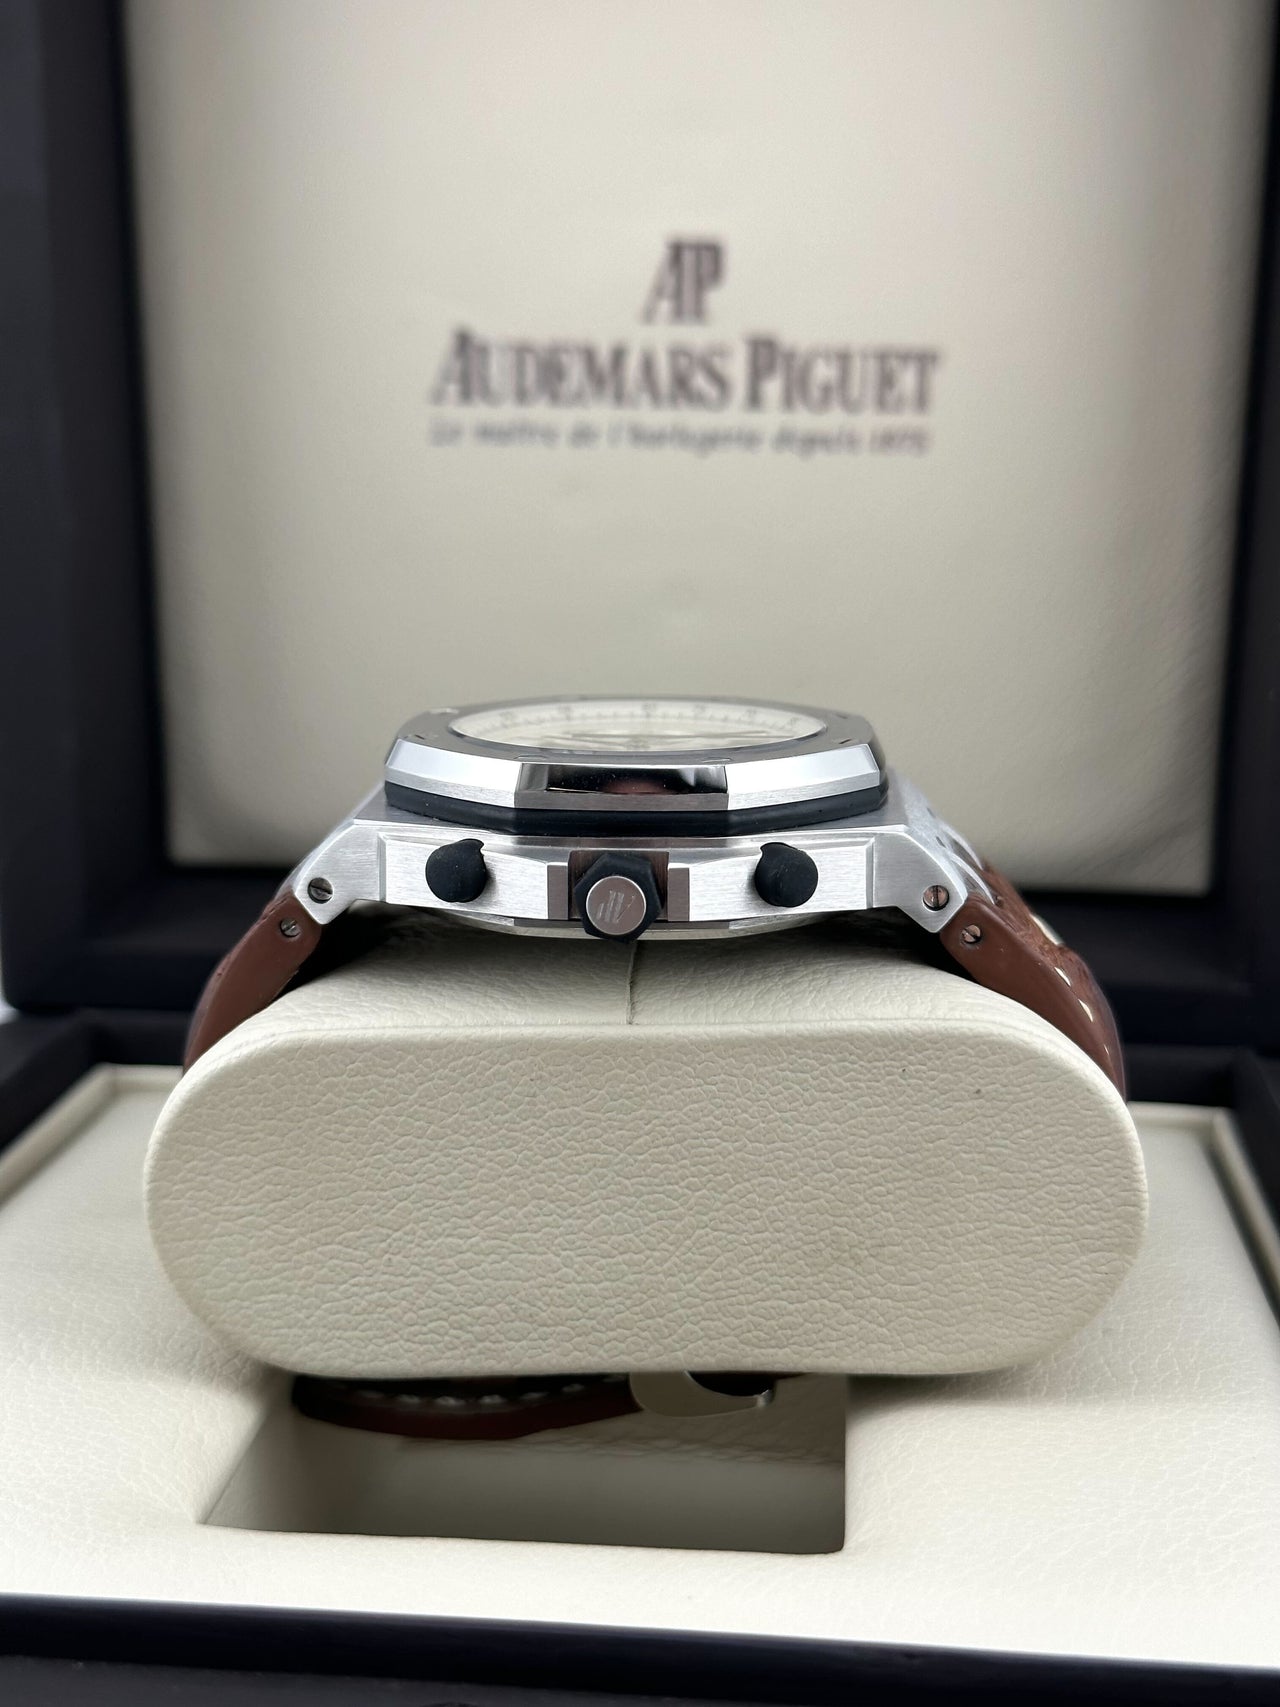 Audemars Piguet Royal Oak Offshore Chronograph "Safari" Stainless Steel White Dial 26020ST.OO.D091CR.01.A Wrist Aficionado